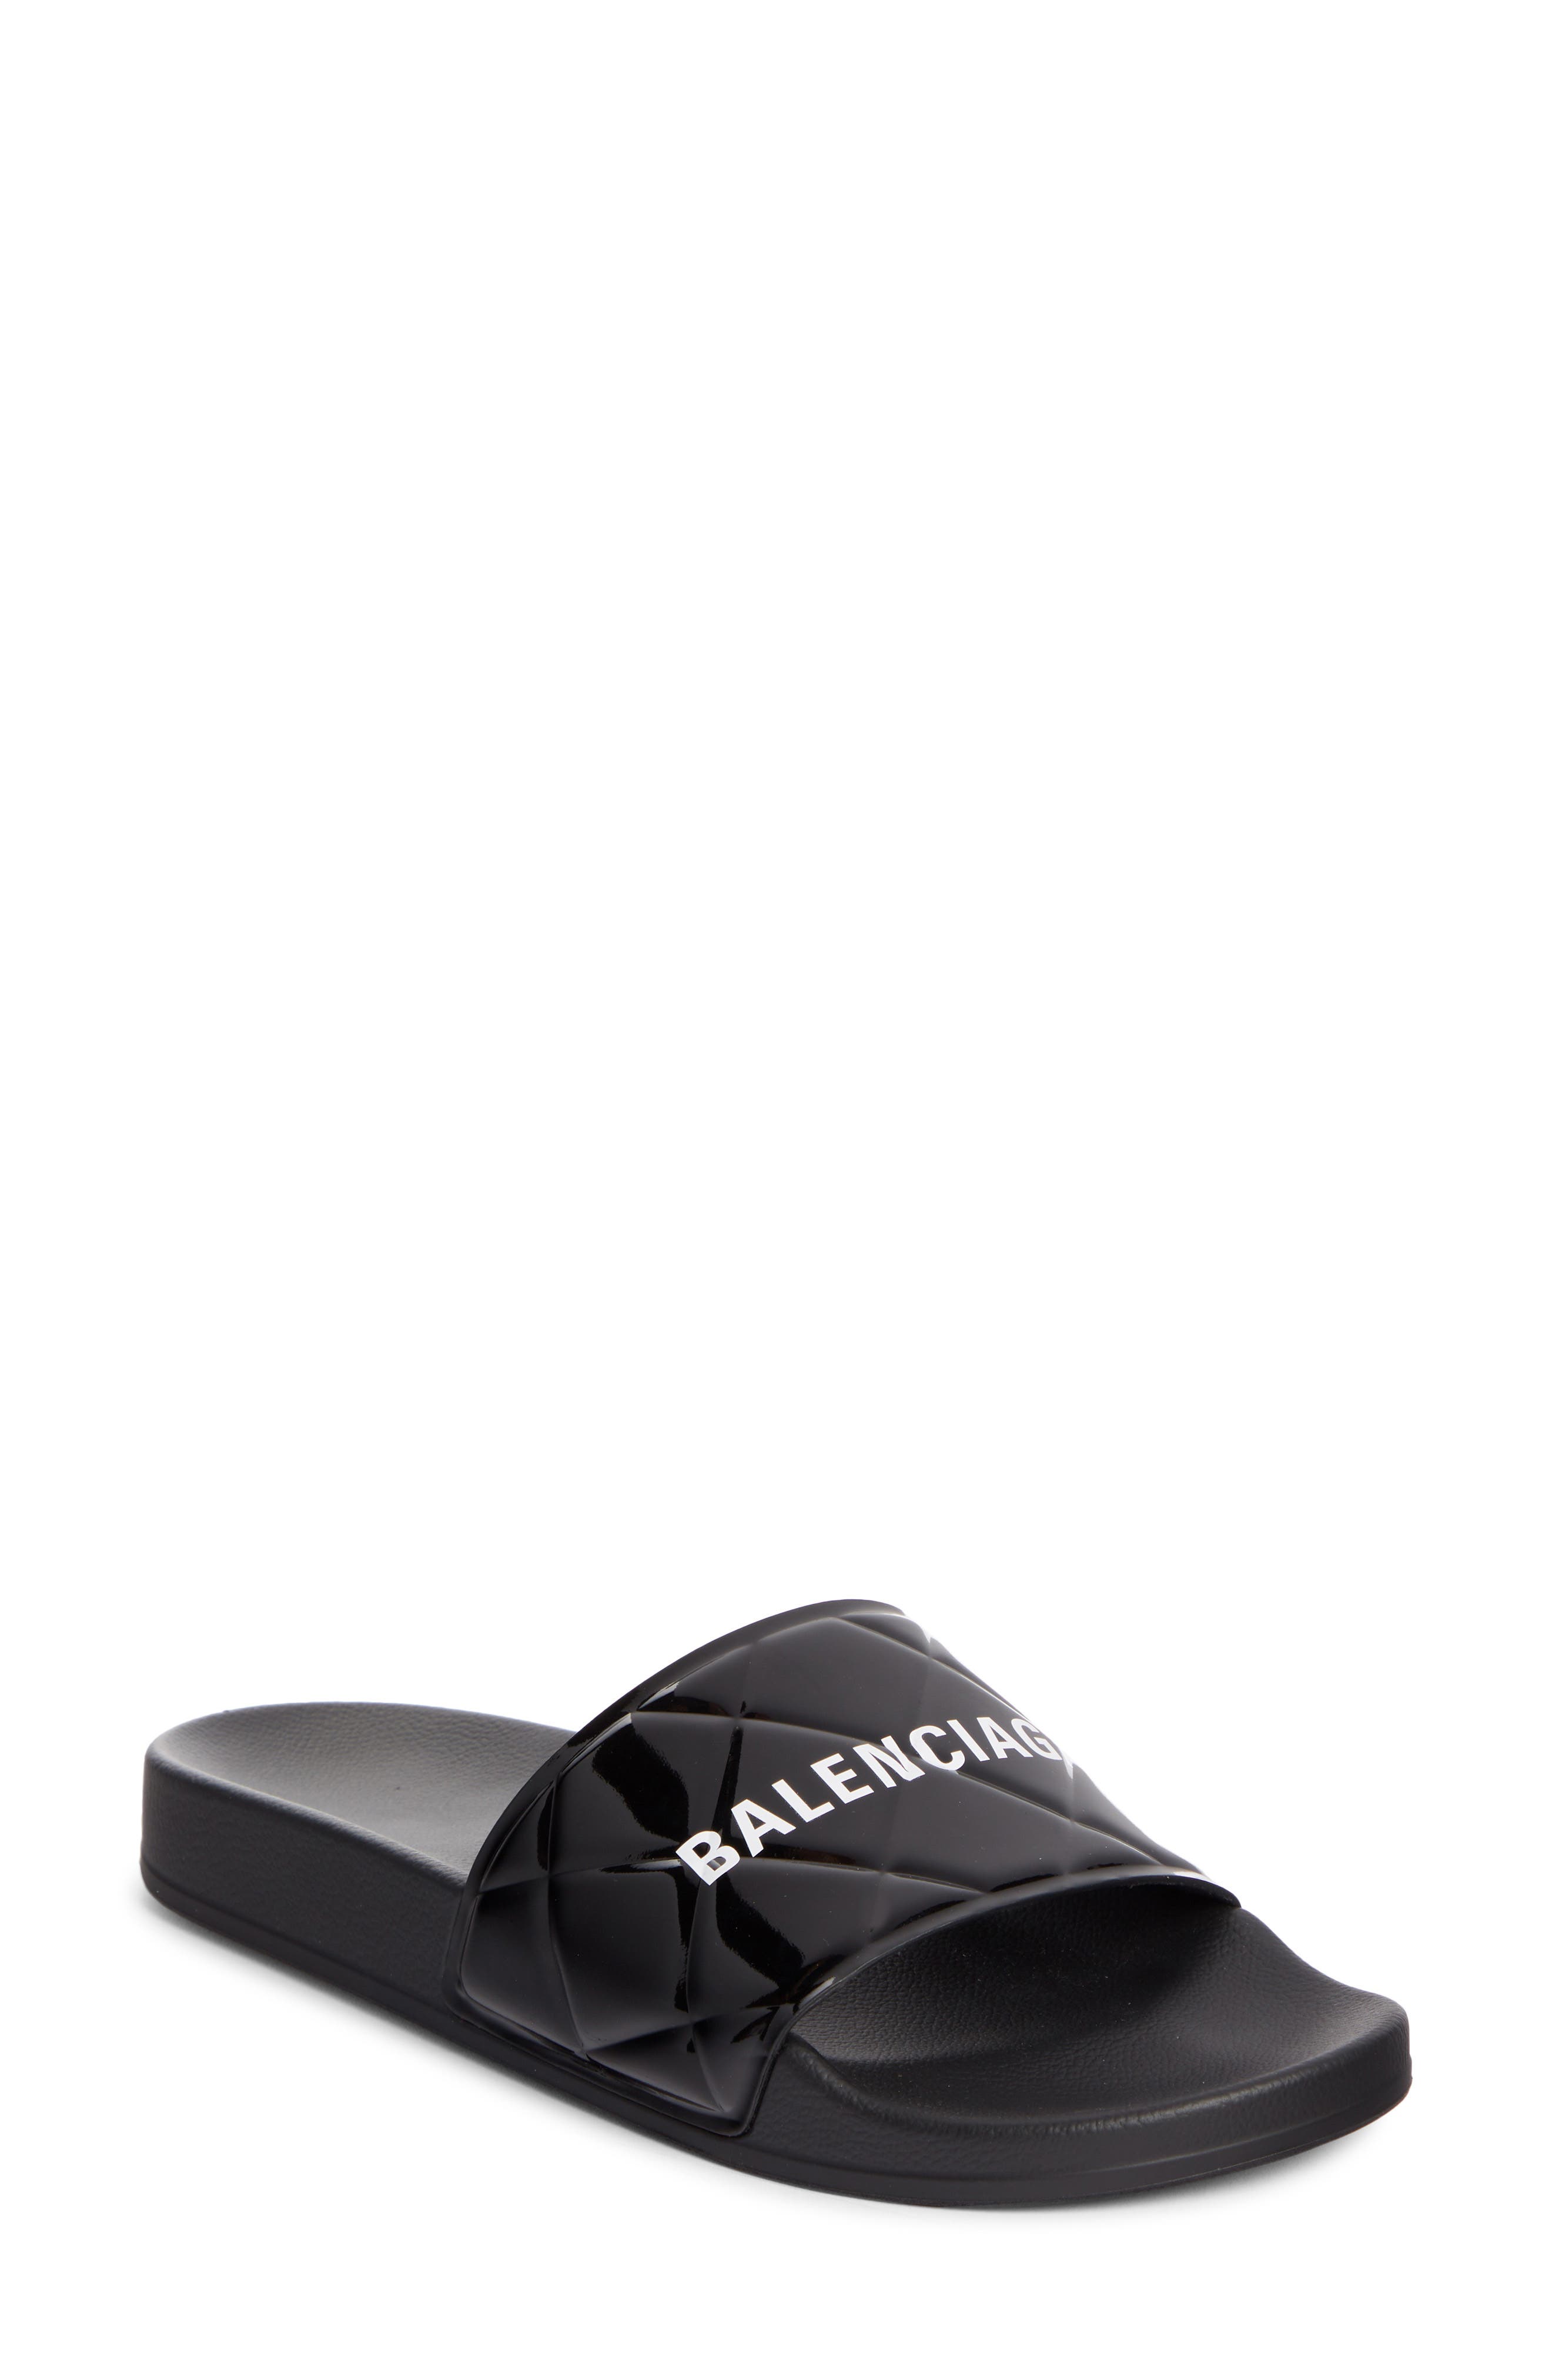 Balenciaga Patent Leather Slide Sandal 